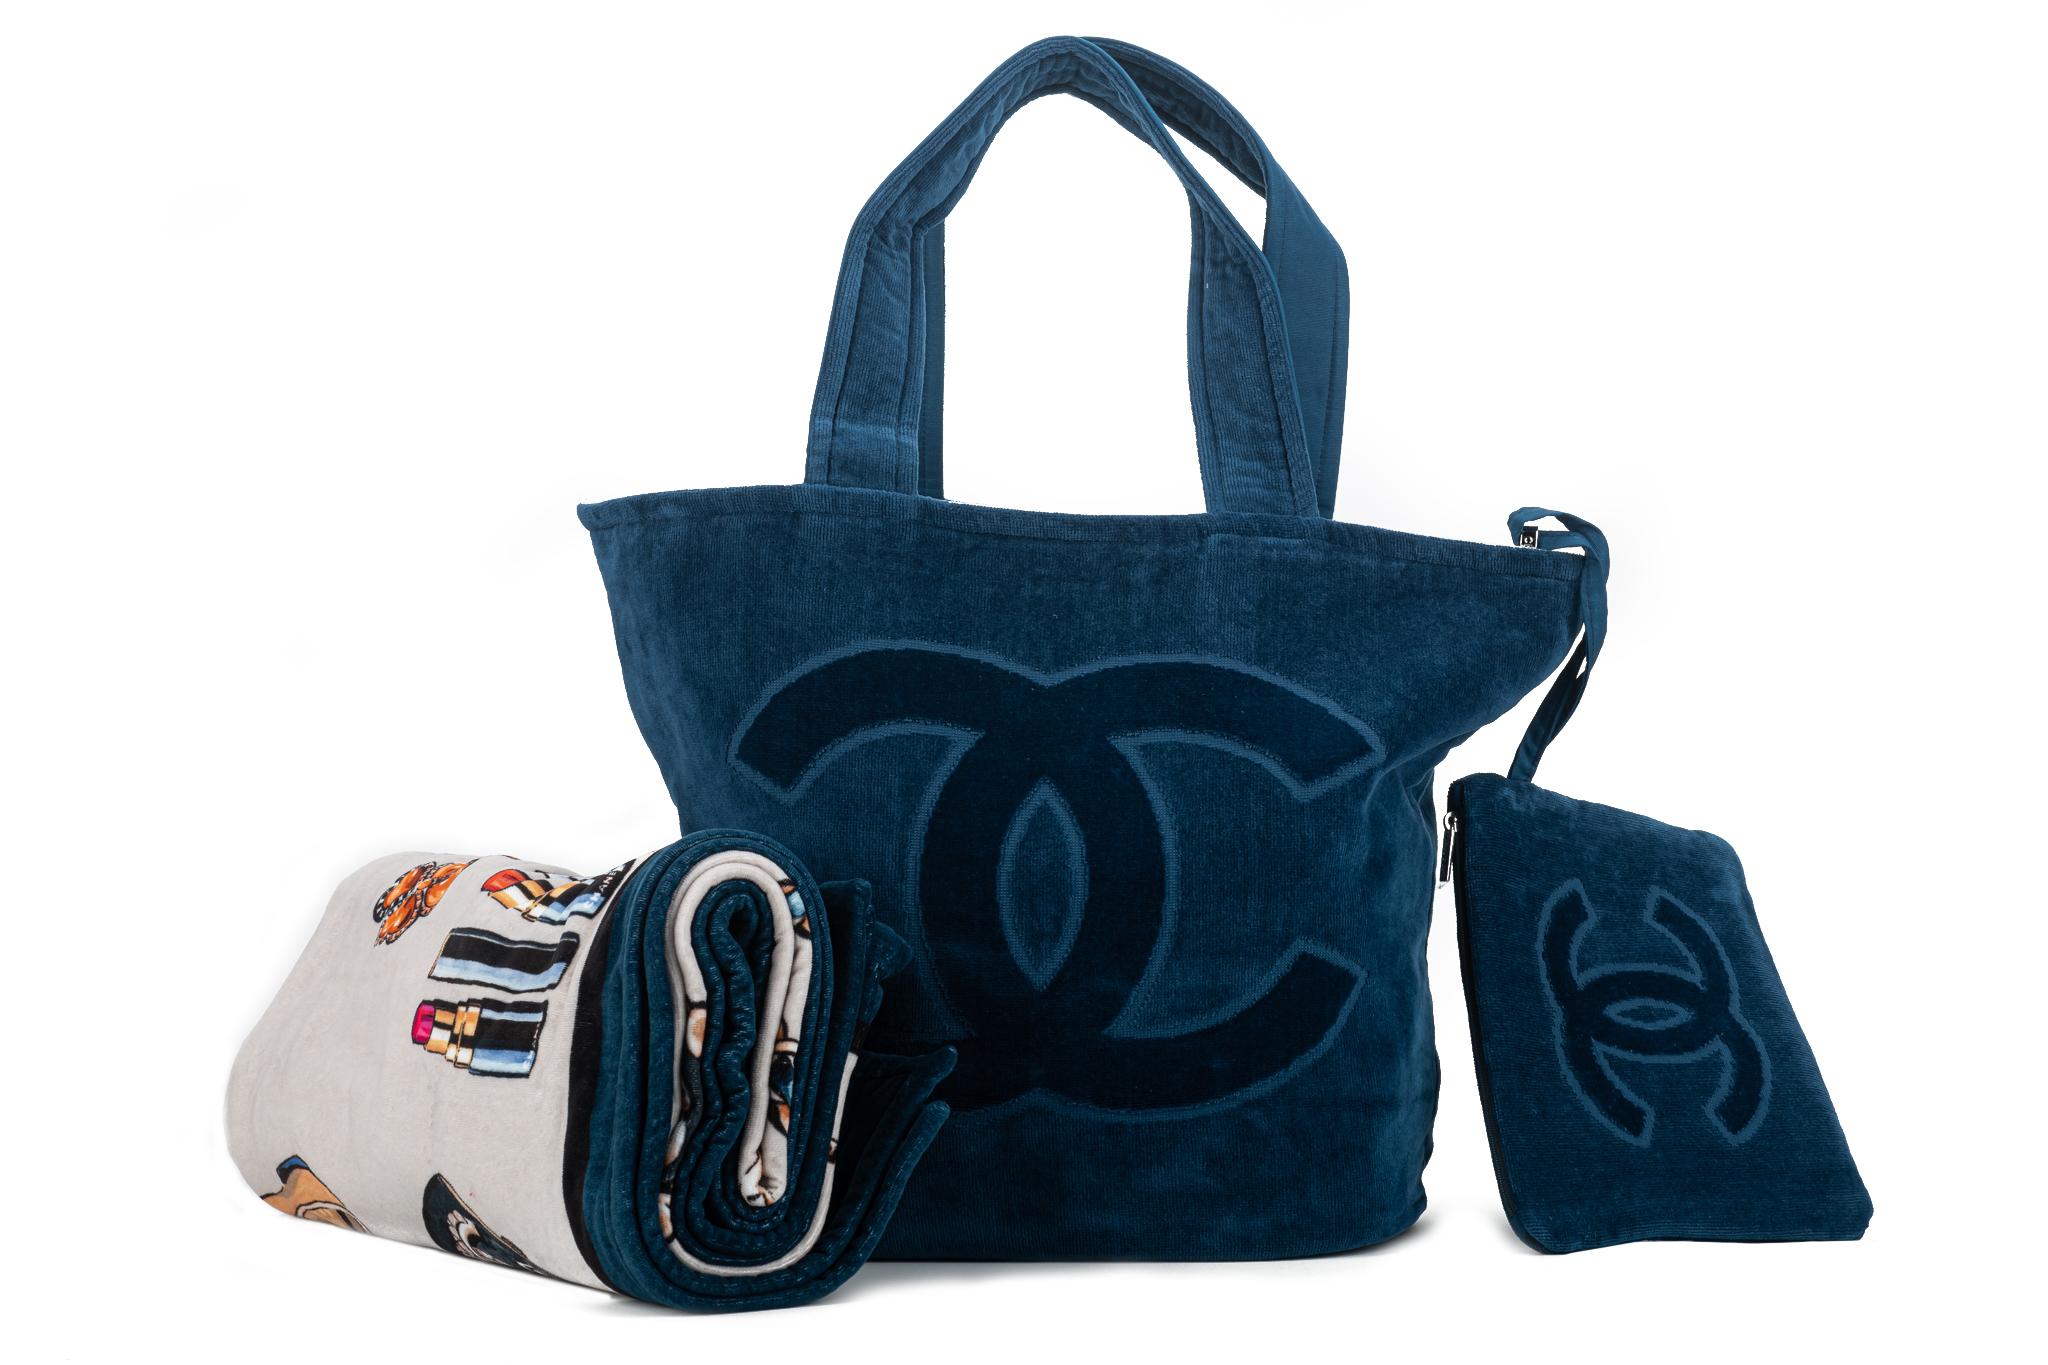 New Chanel Blue Beach Bag Towel Set Iconic Design 2